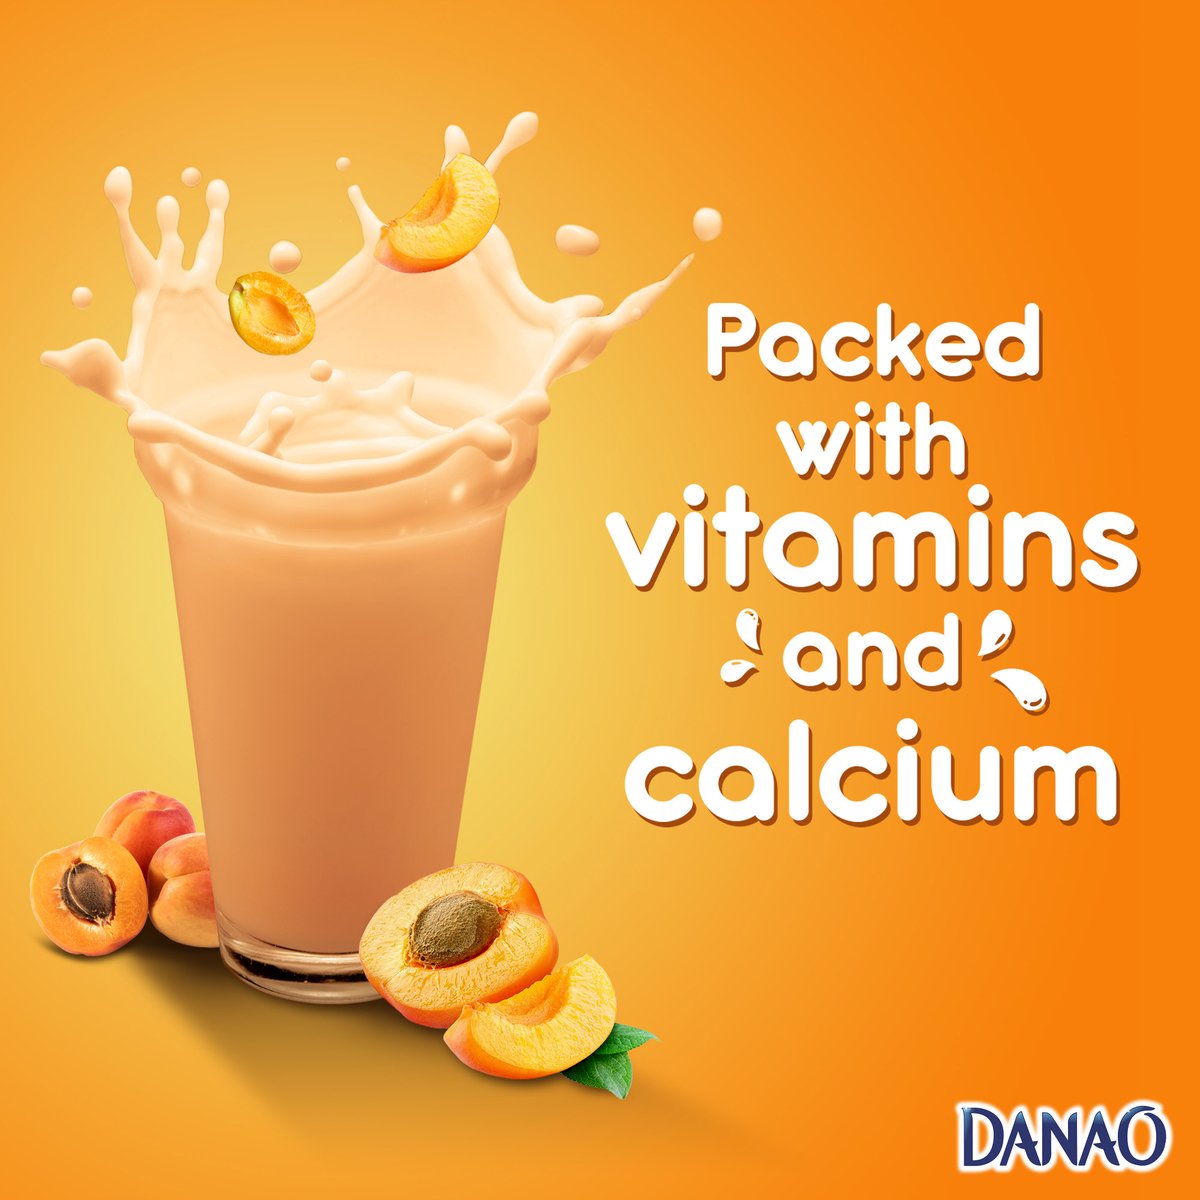 Danao Juice Drink with Milk Peach & Apricot 1 Litre